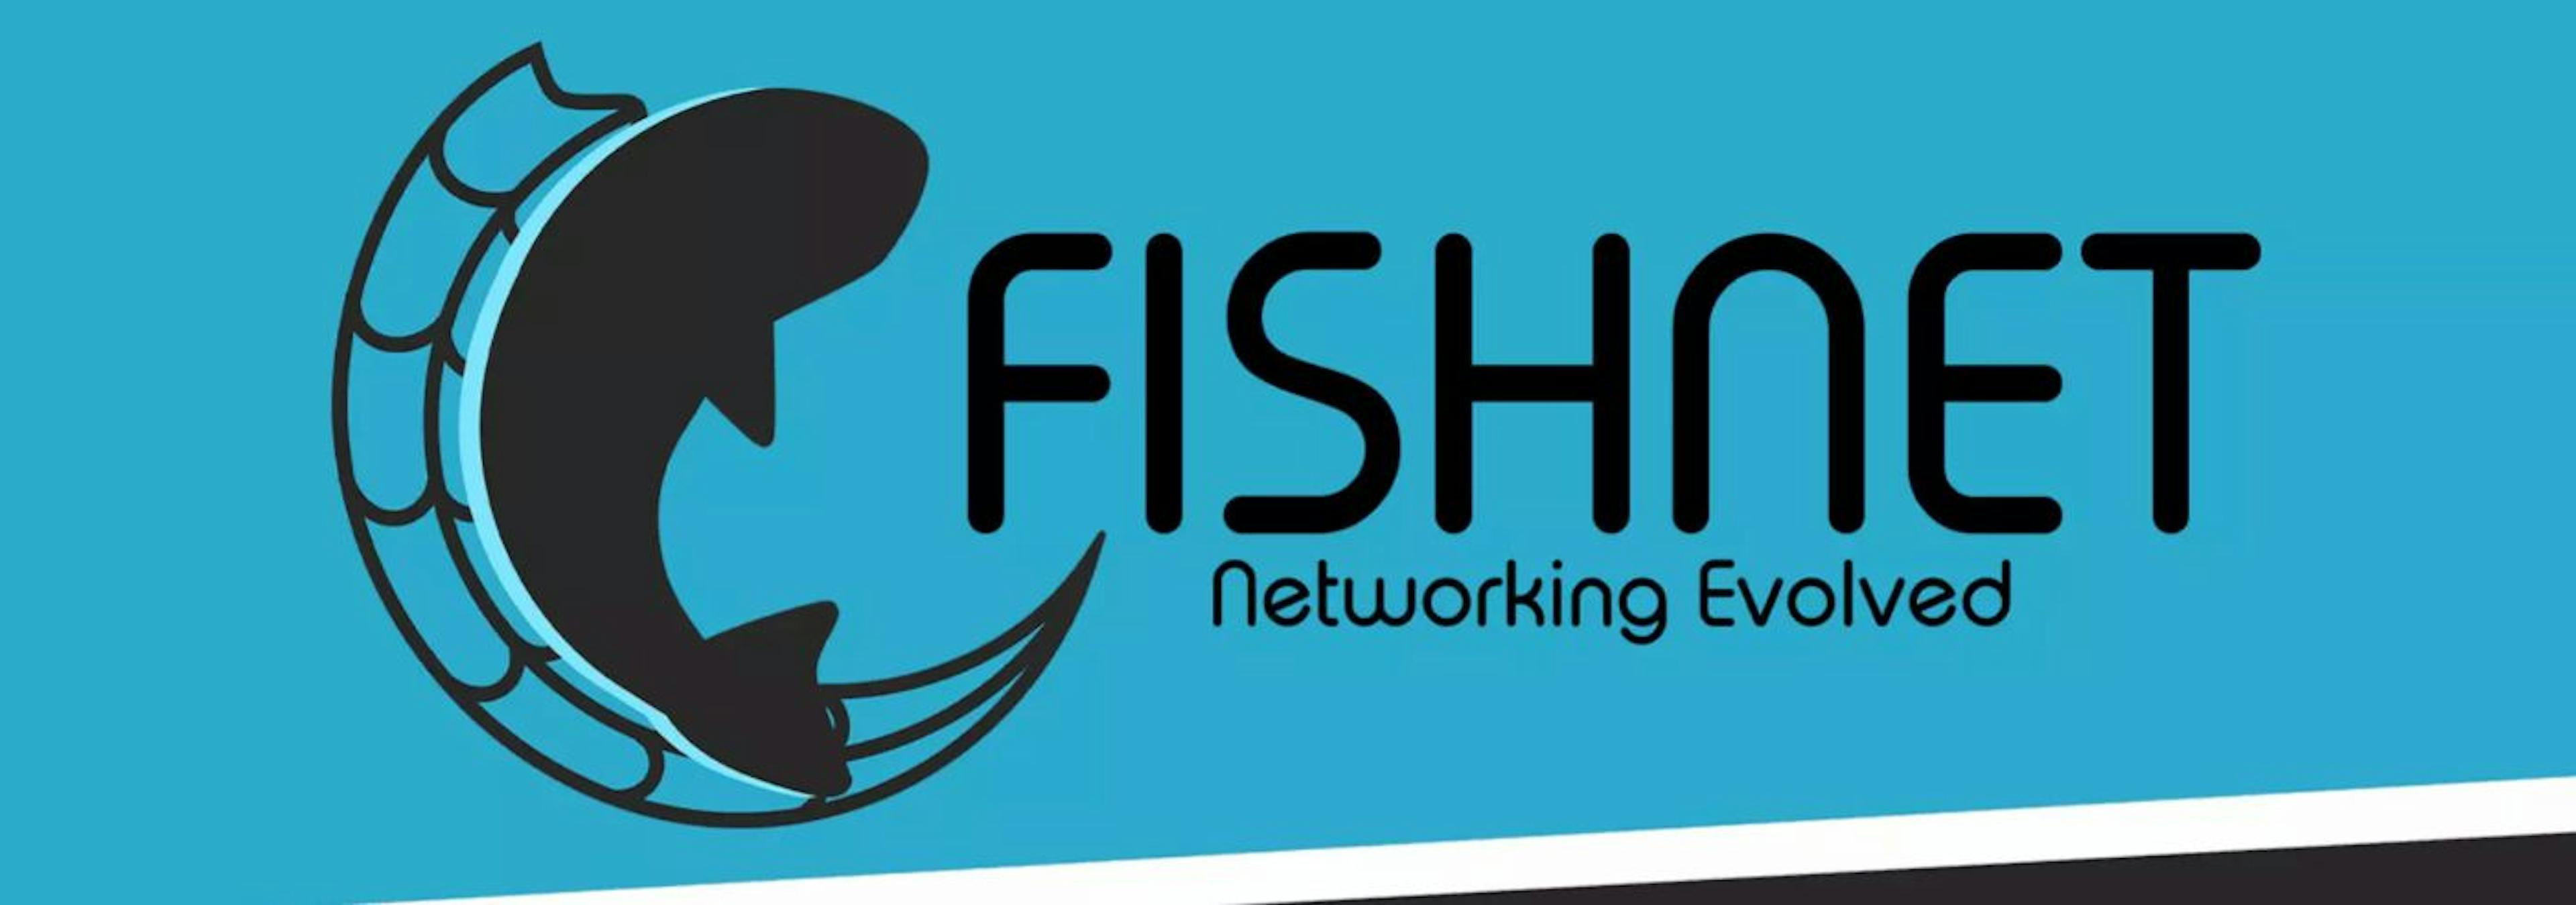 Fish Networking Logo